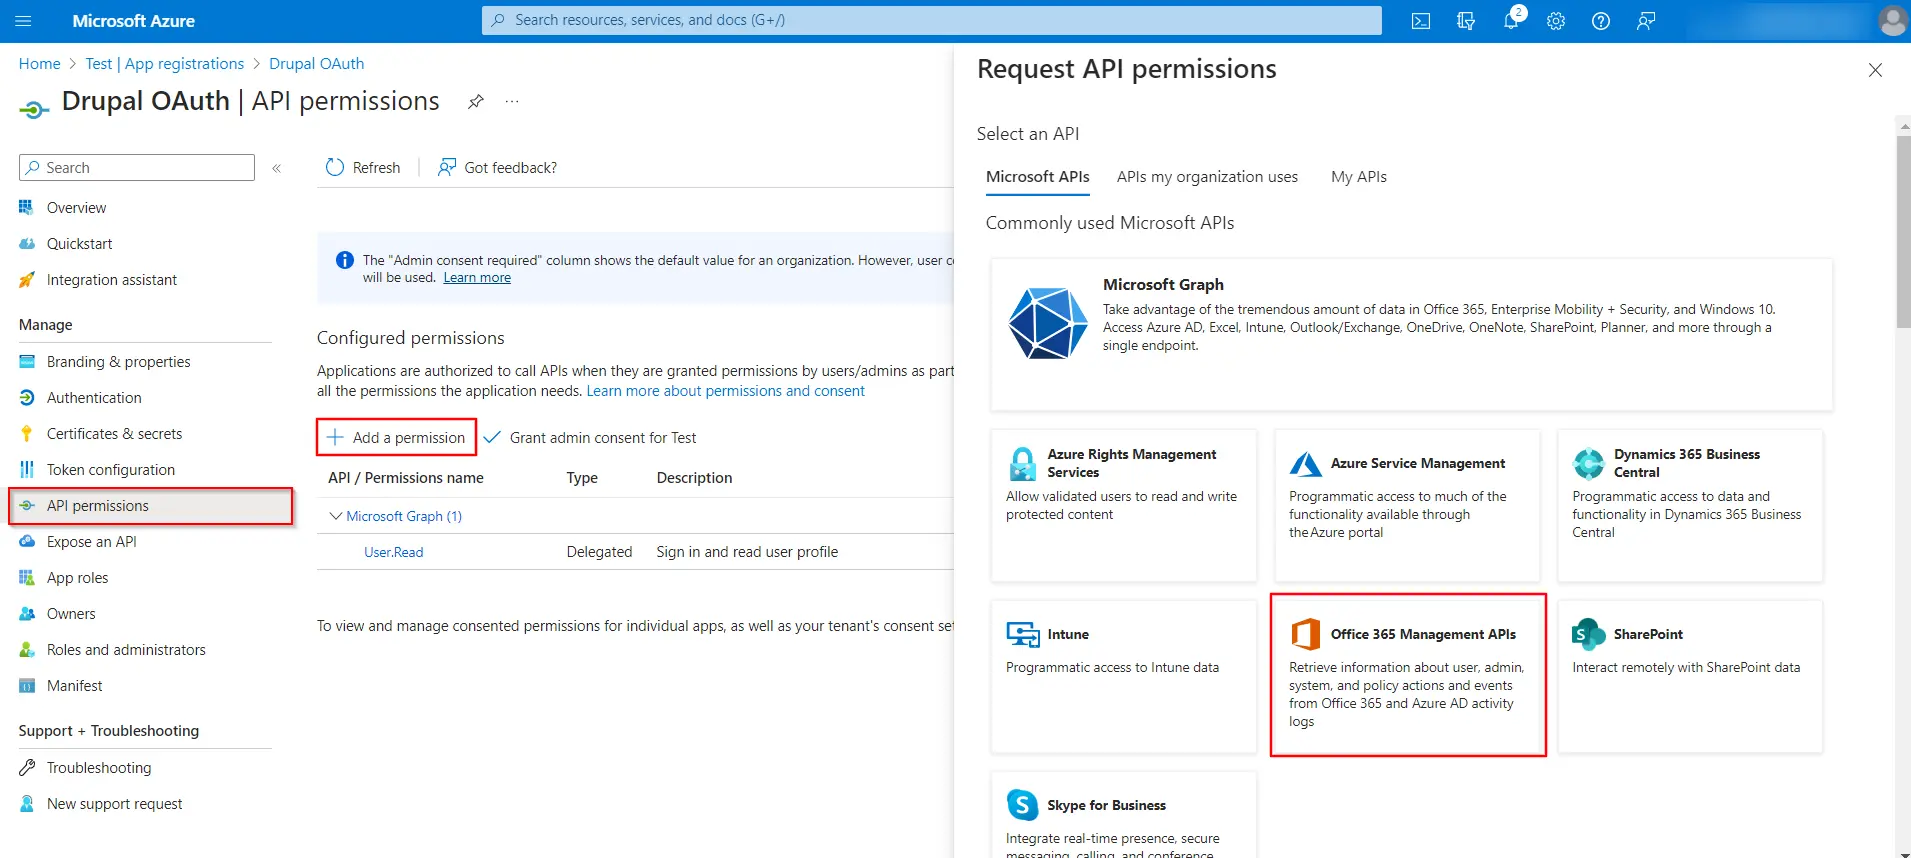 Microsoft Office 365 - Click on API Permissions - Add API permission - Microsoft APIs - Office 365 Management APIs - Applcation permissions